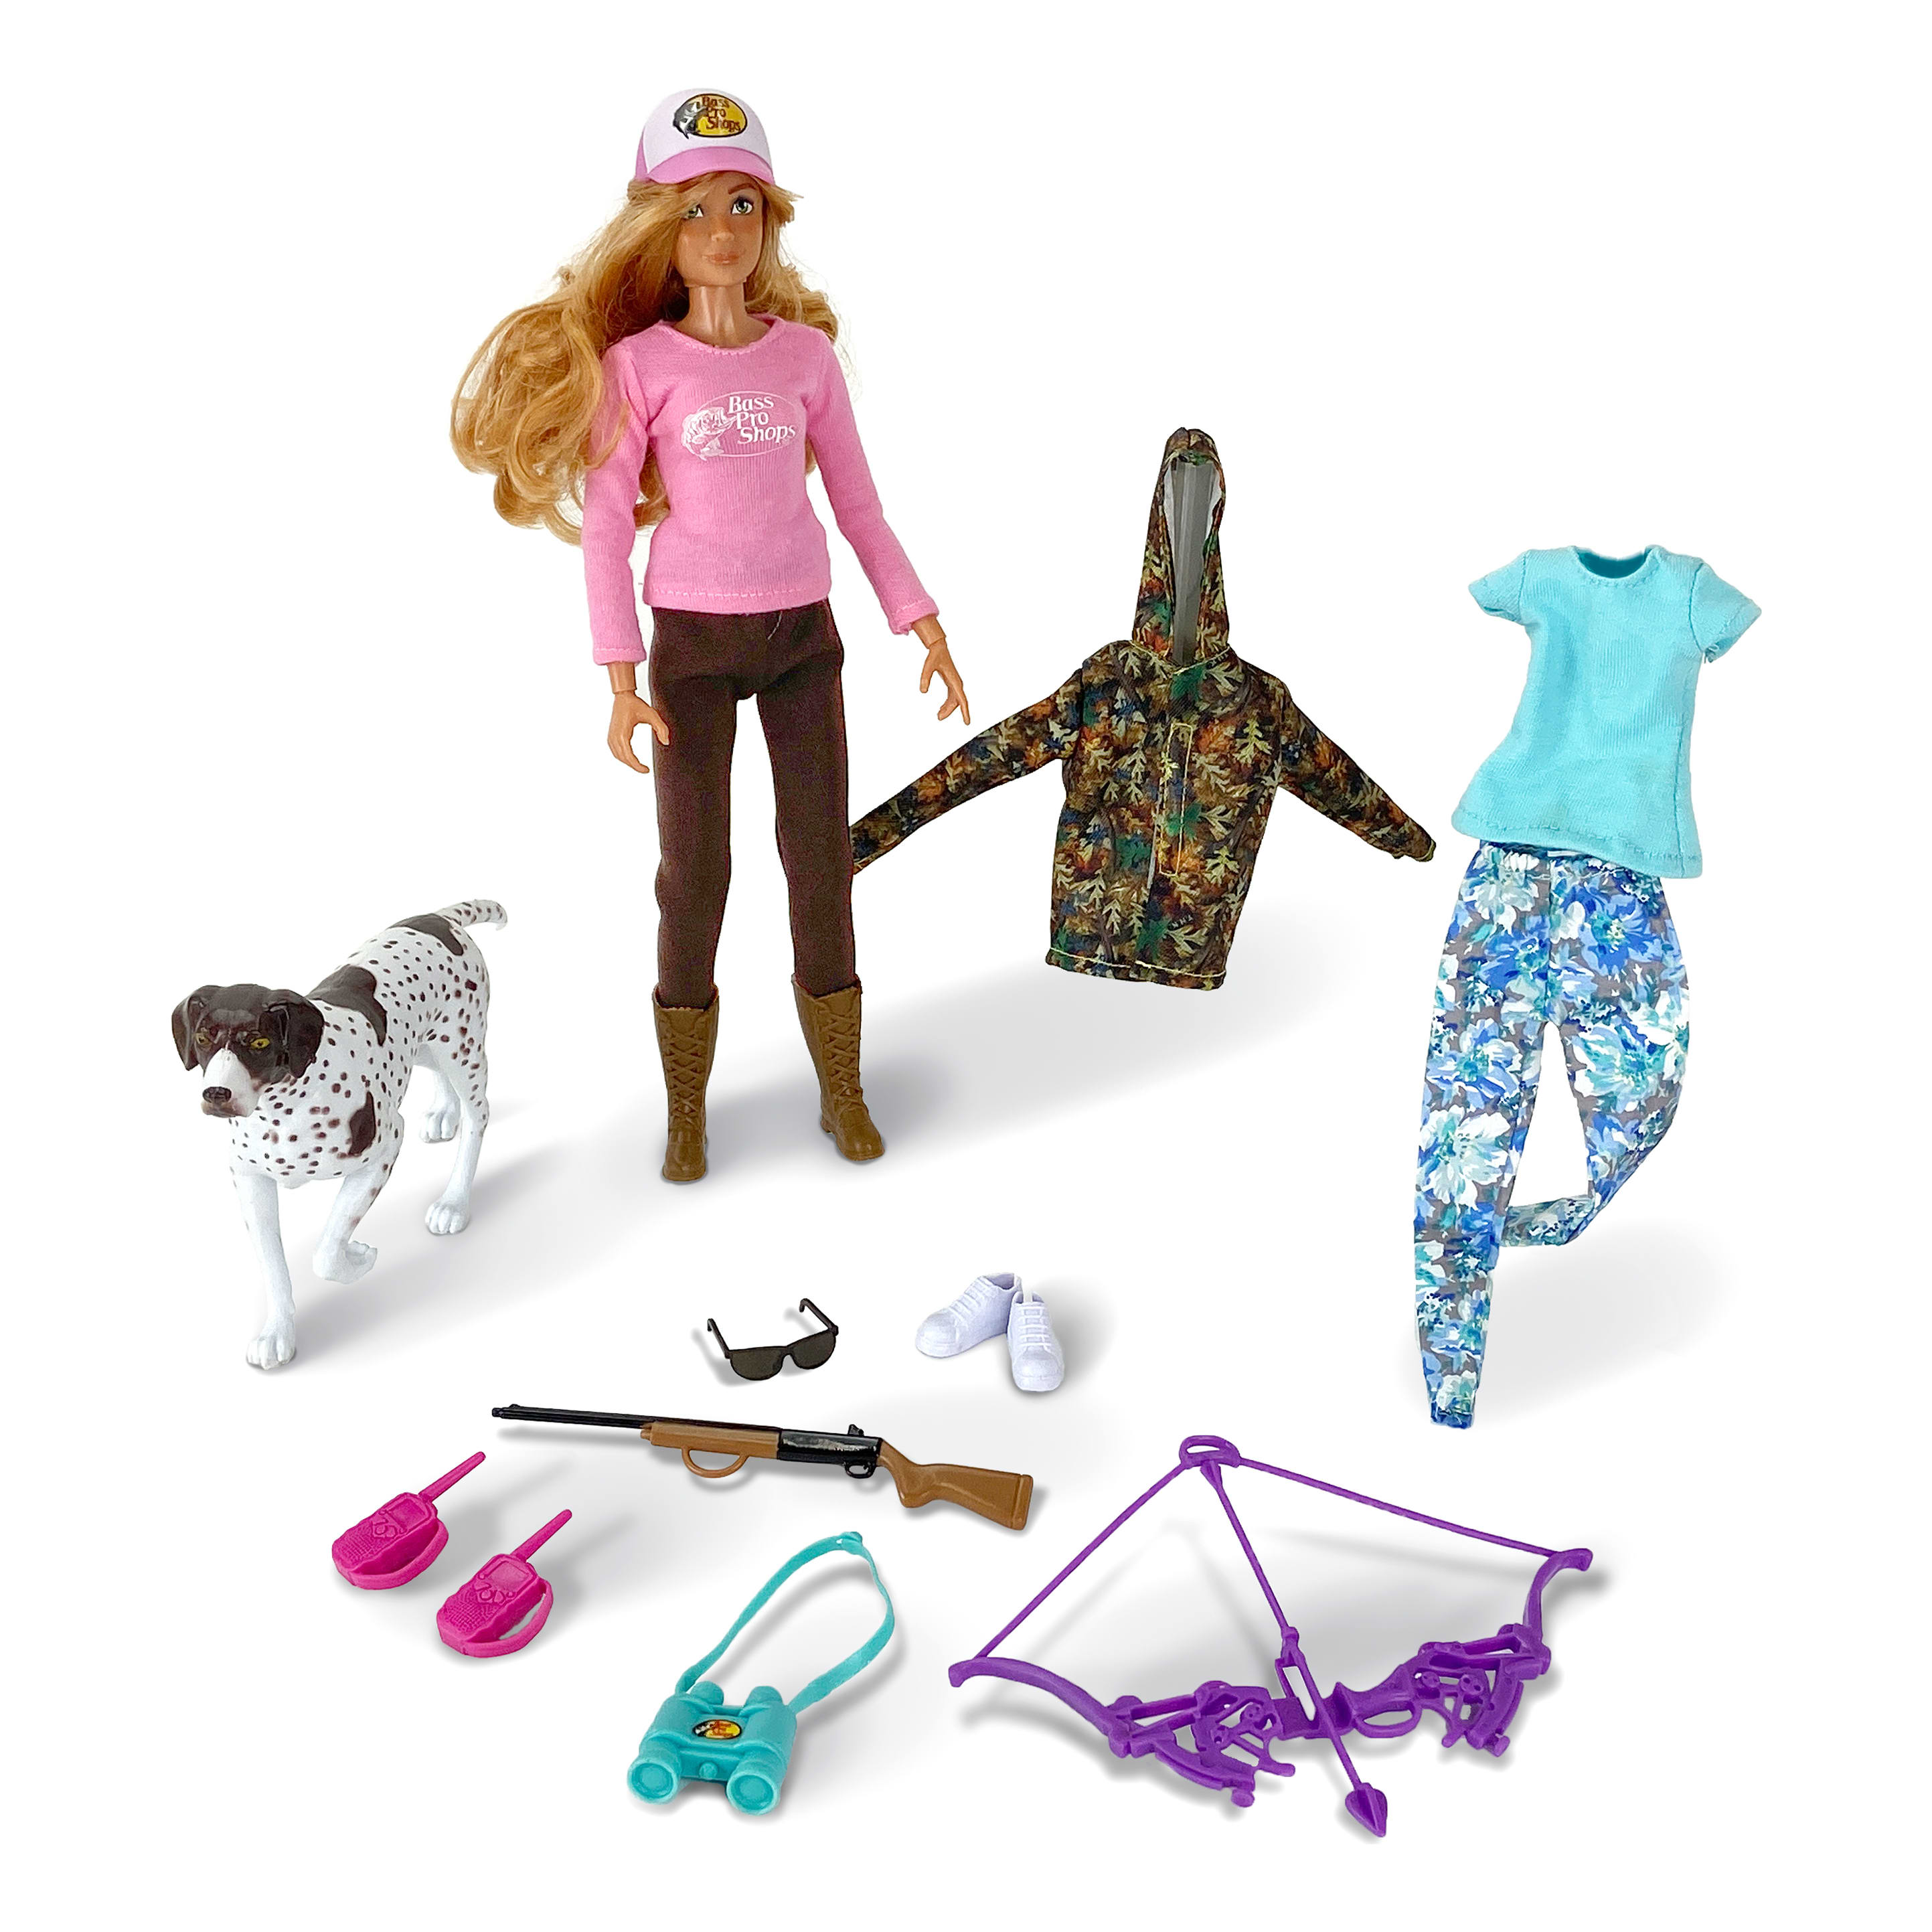 Bass Pro Shops Doll Set - Hunting - Cabelas - BASS PRO - Kids' Toys